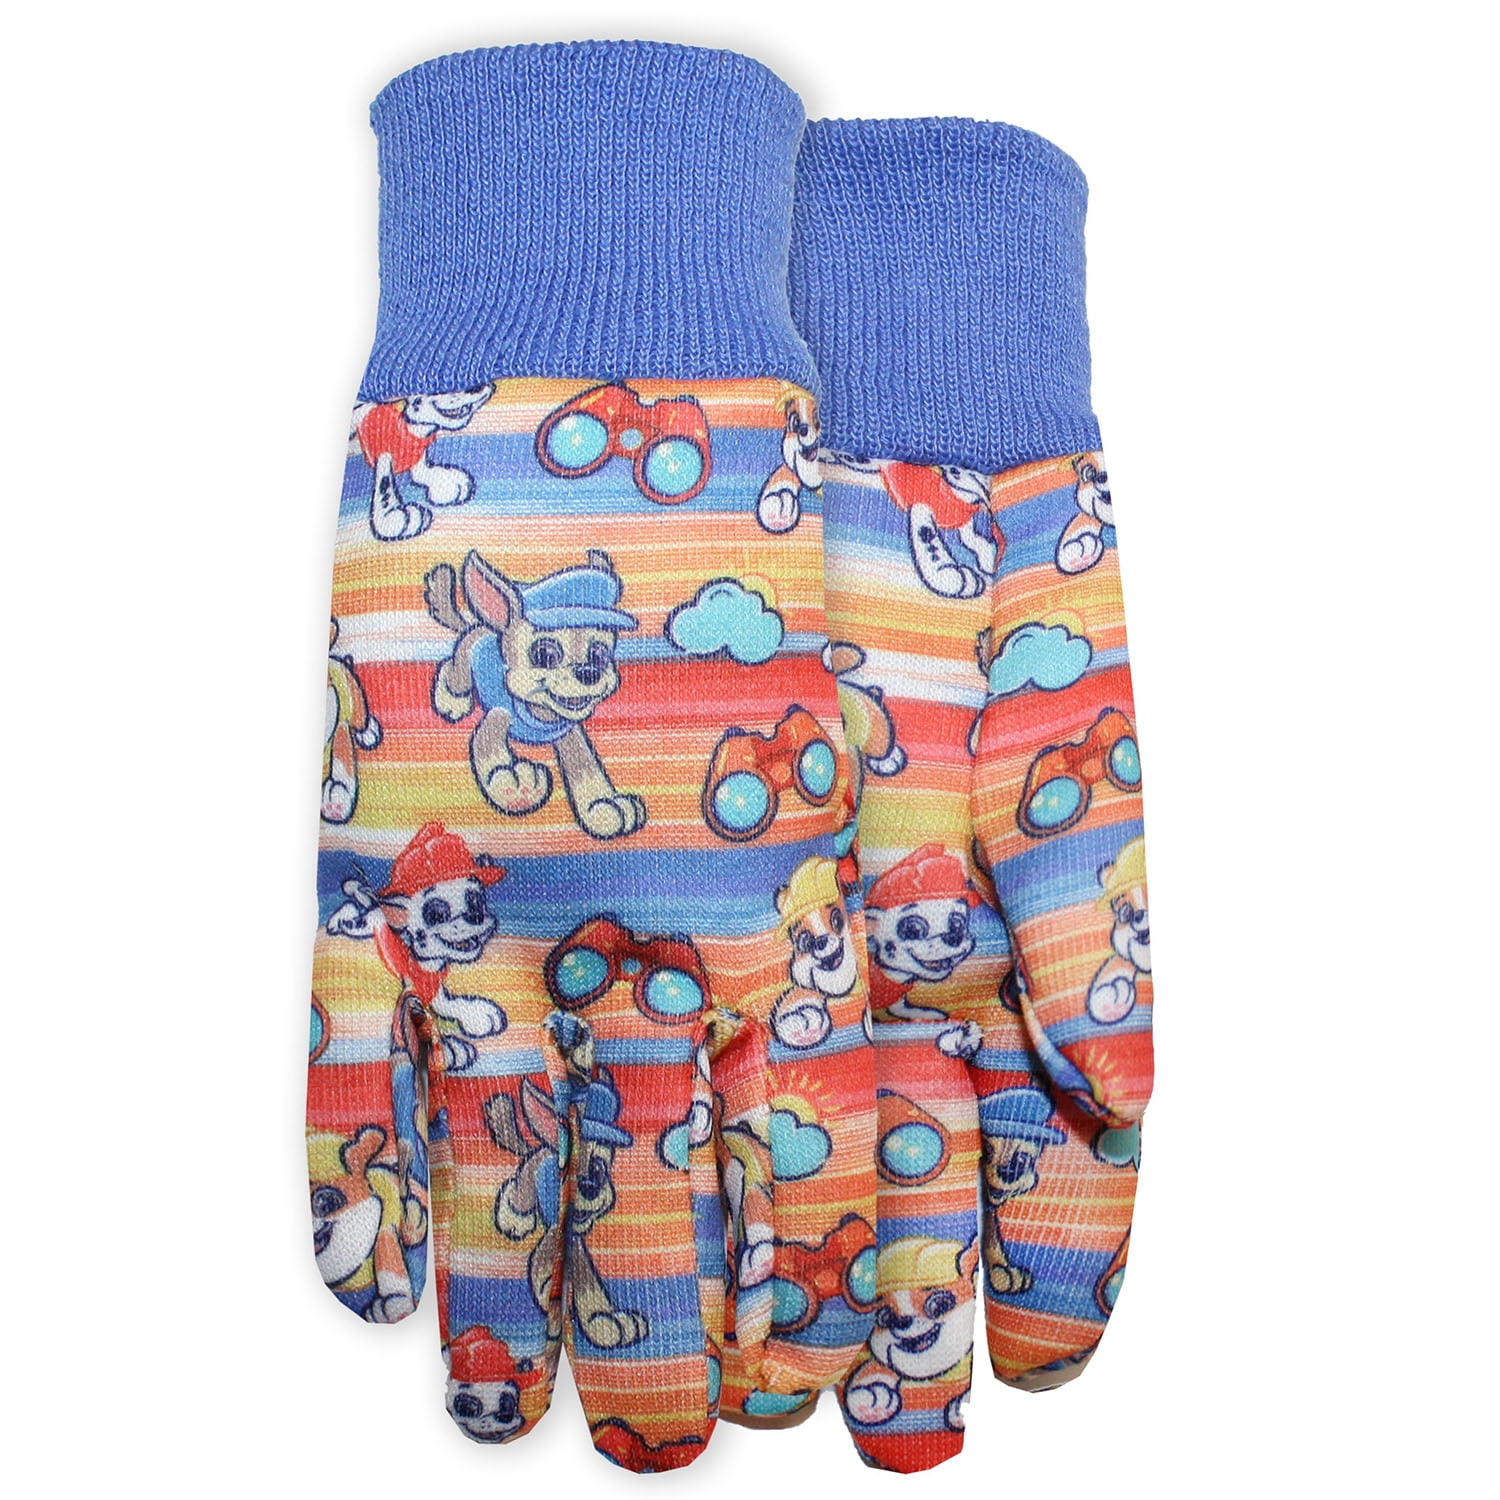 Nickelodeon Kids Cotton Gardening Gloves - Blue- pack of 6